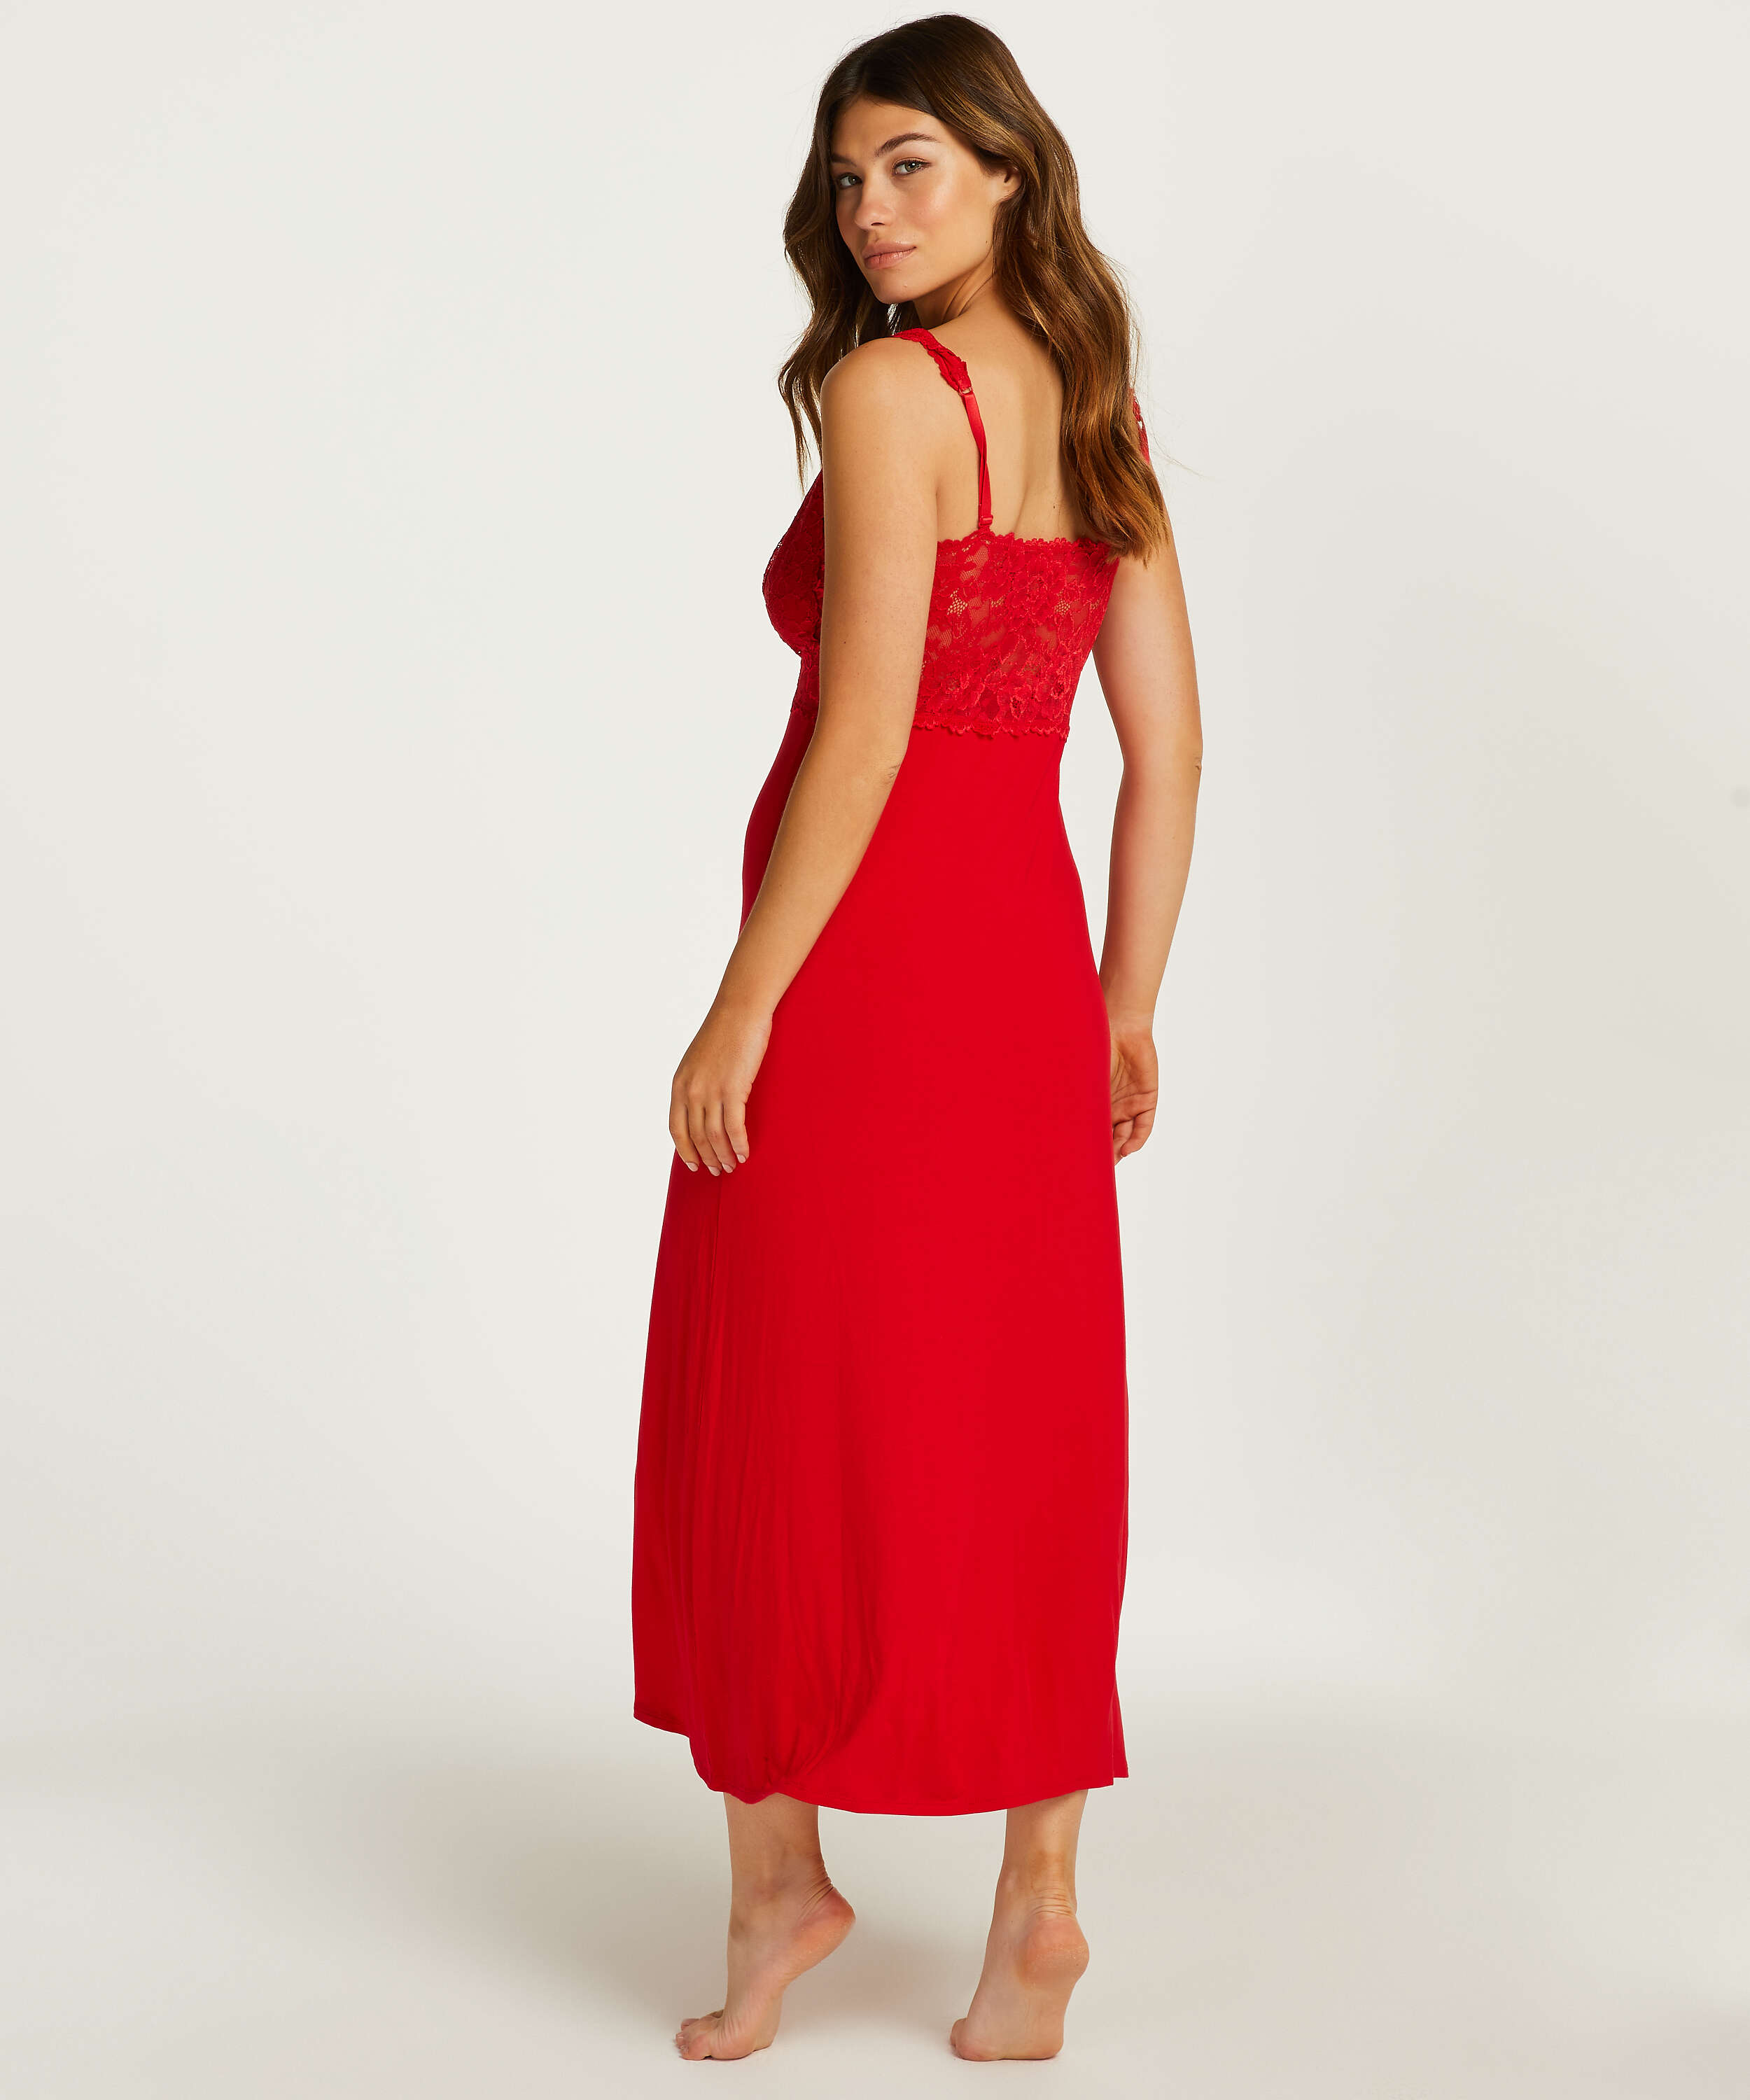 Nora Lace Long Slip Dress, Red, main